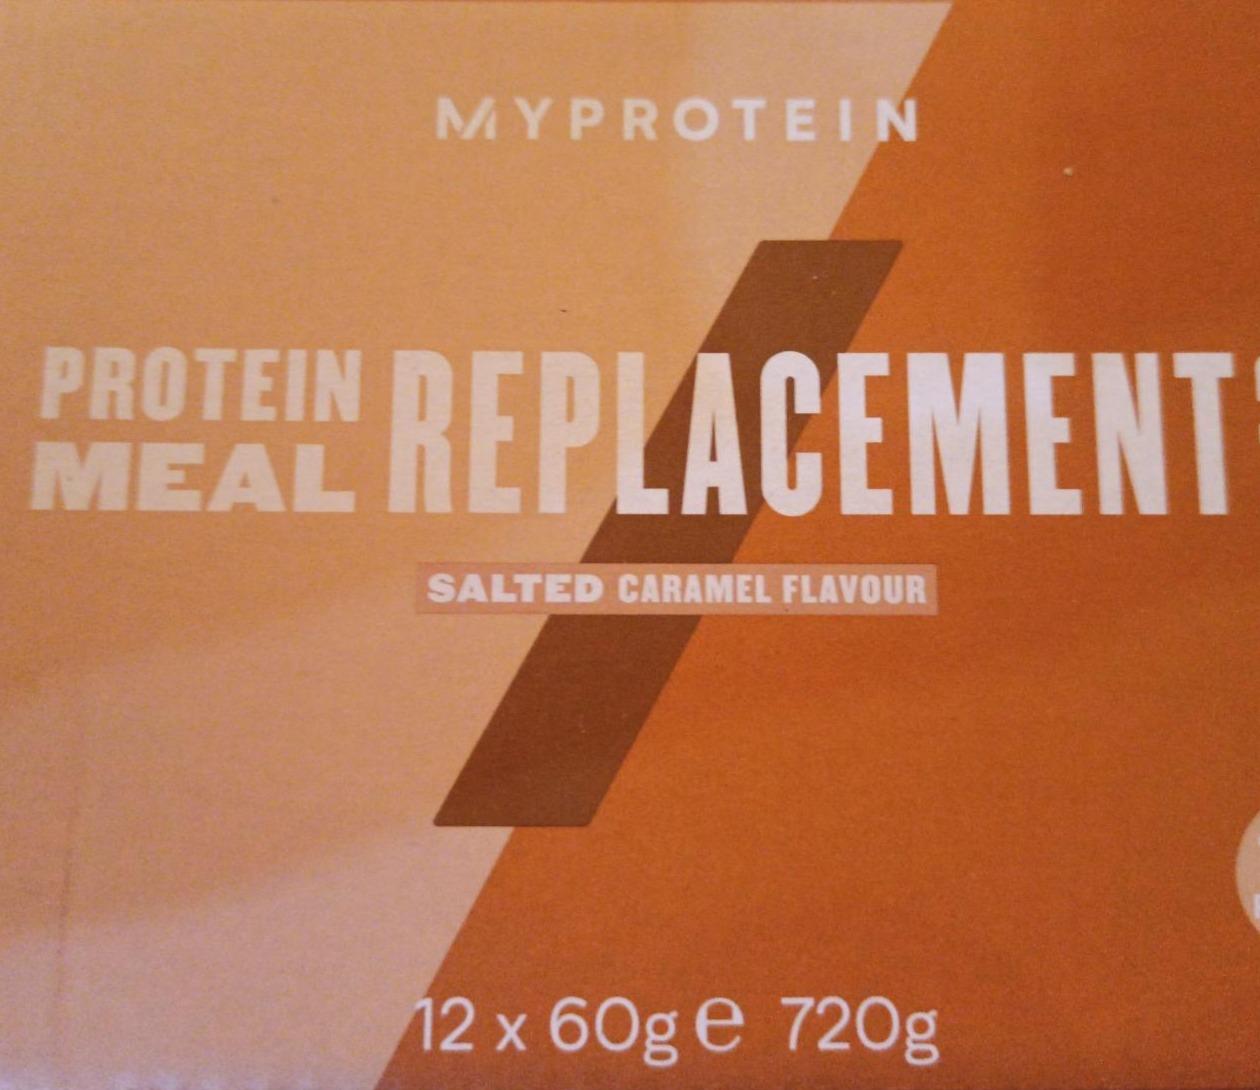 Фото - Енергетичний батончик зі смаком солоної карамелі Protein Meal Replacement My protein